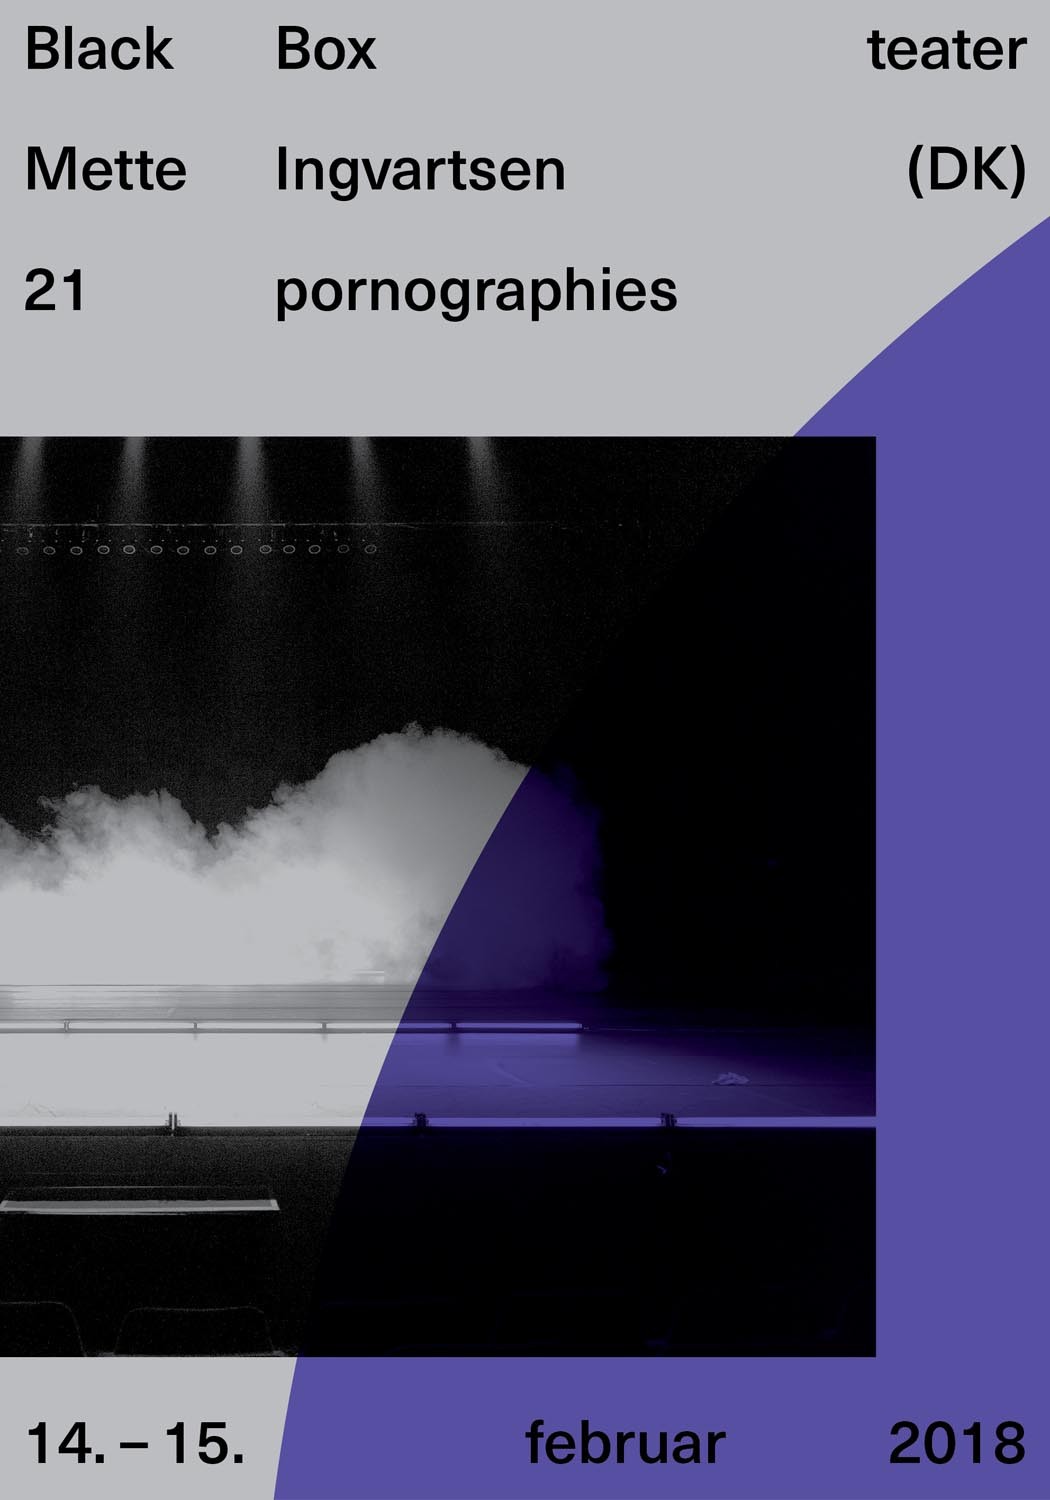 Pornographies - 21 pornographies â€“ Black Box teater